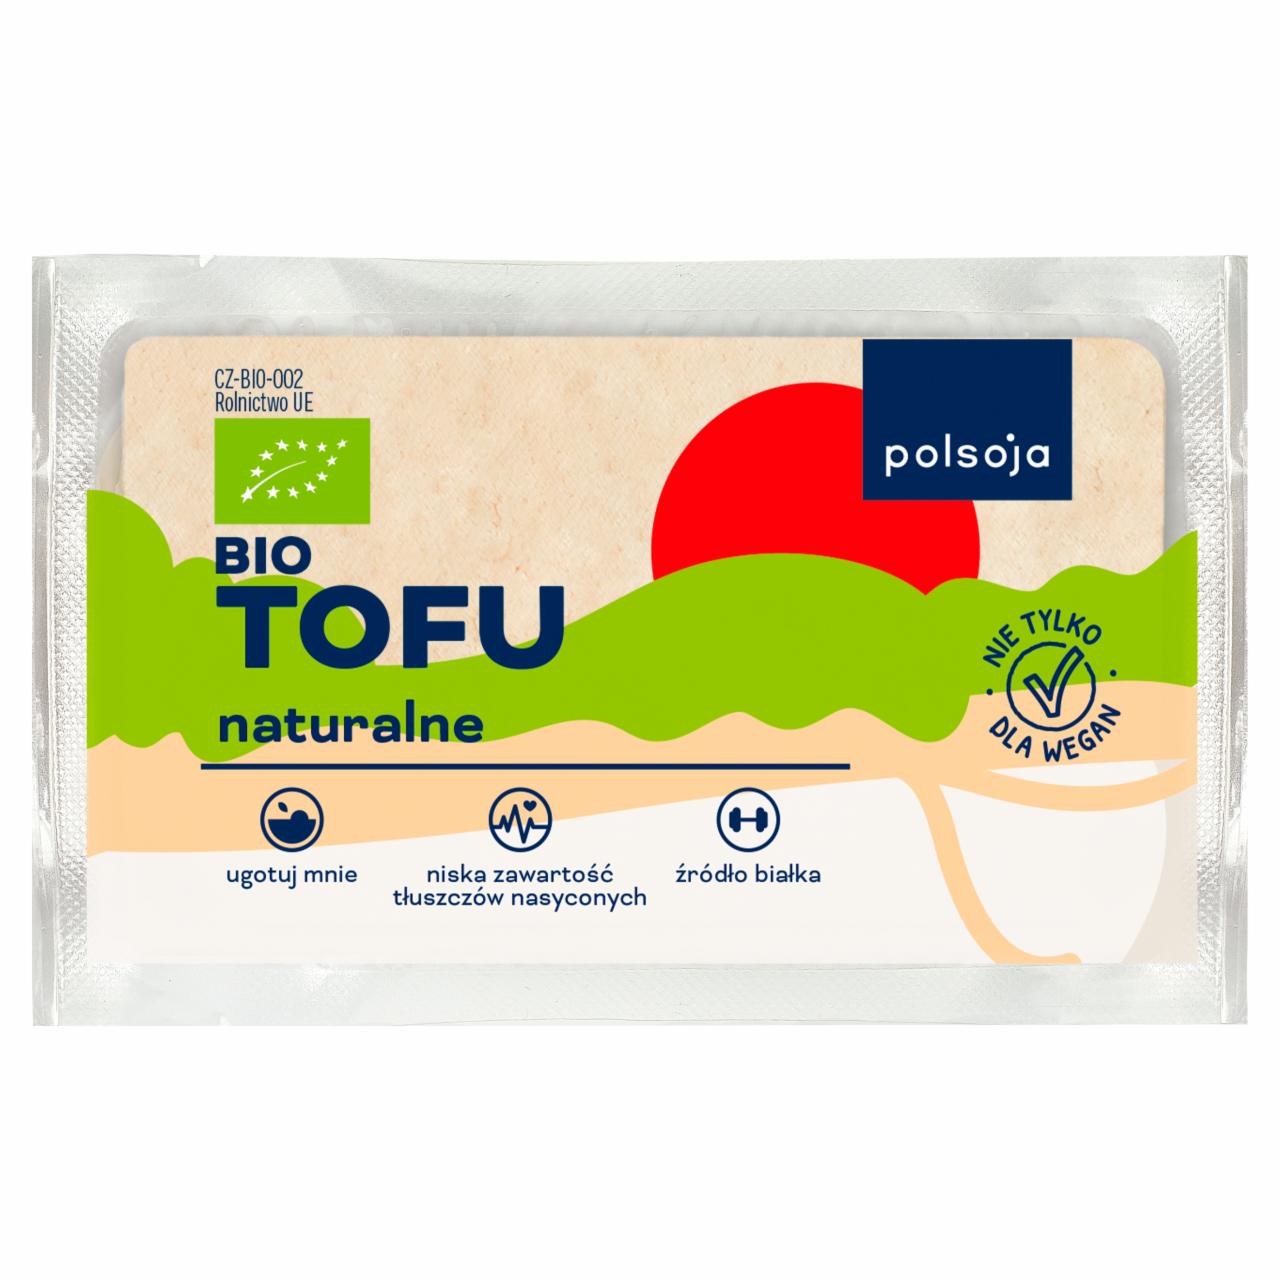 Zdjęcia - Polsoja Bio tofu naturalne 200 g